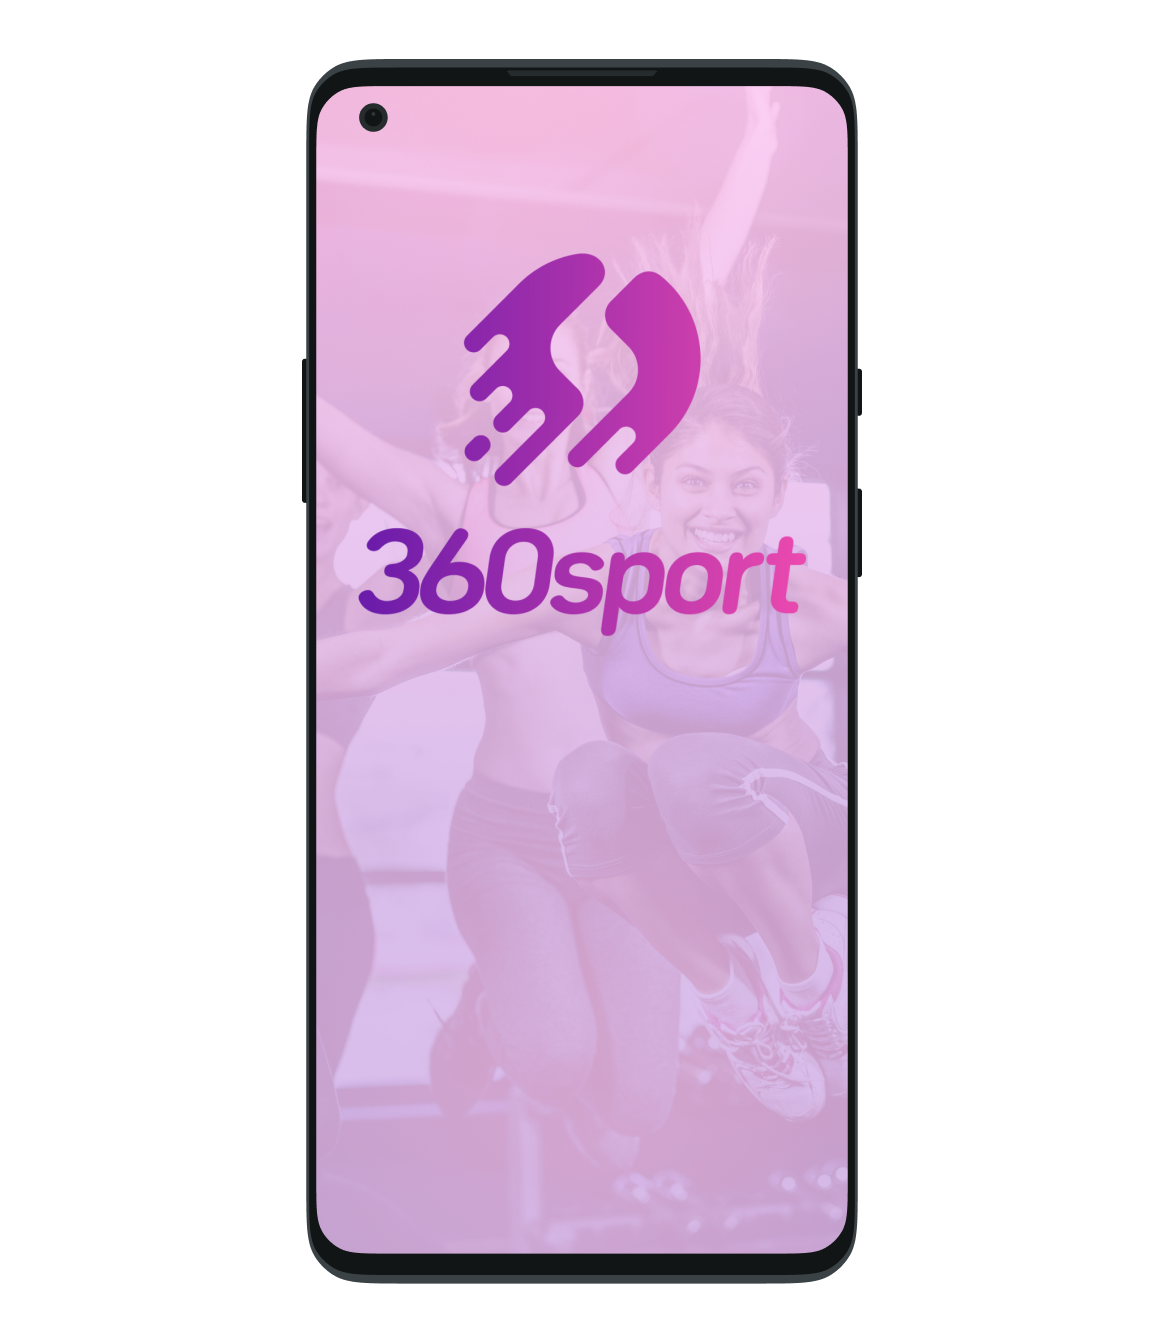 360 sport